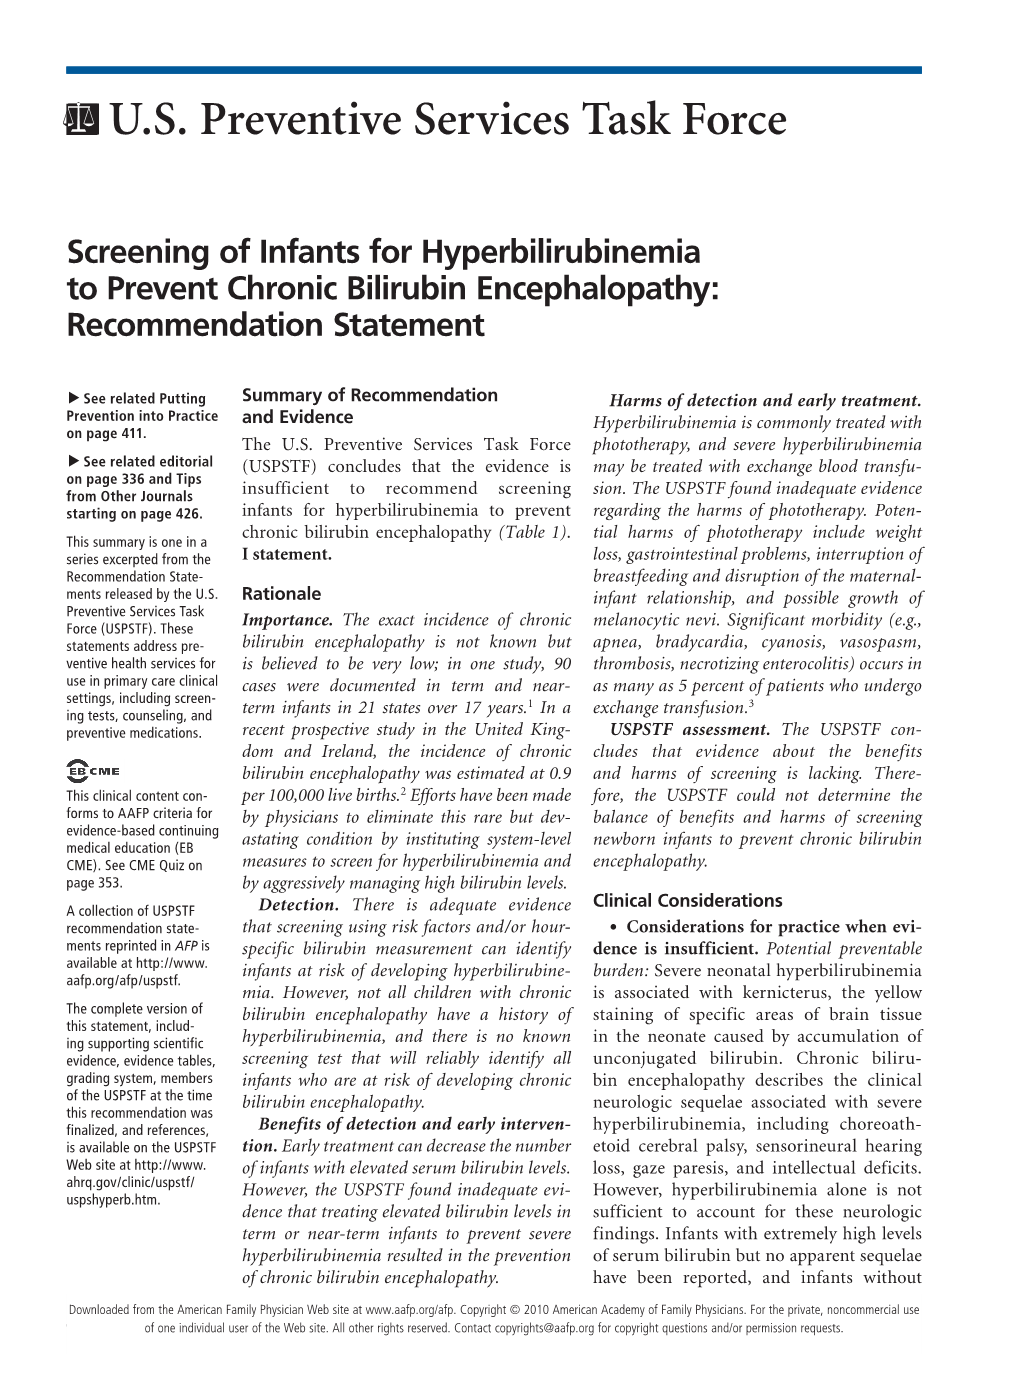 Screening of Infants for Hyperbilirubinemia to Prevent Chronic Bilirubin Encephalopathy: Recommendation Statement